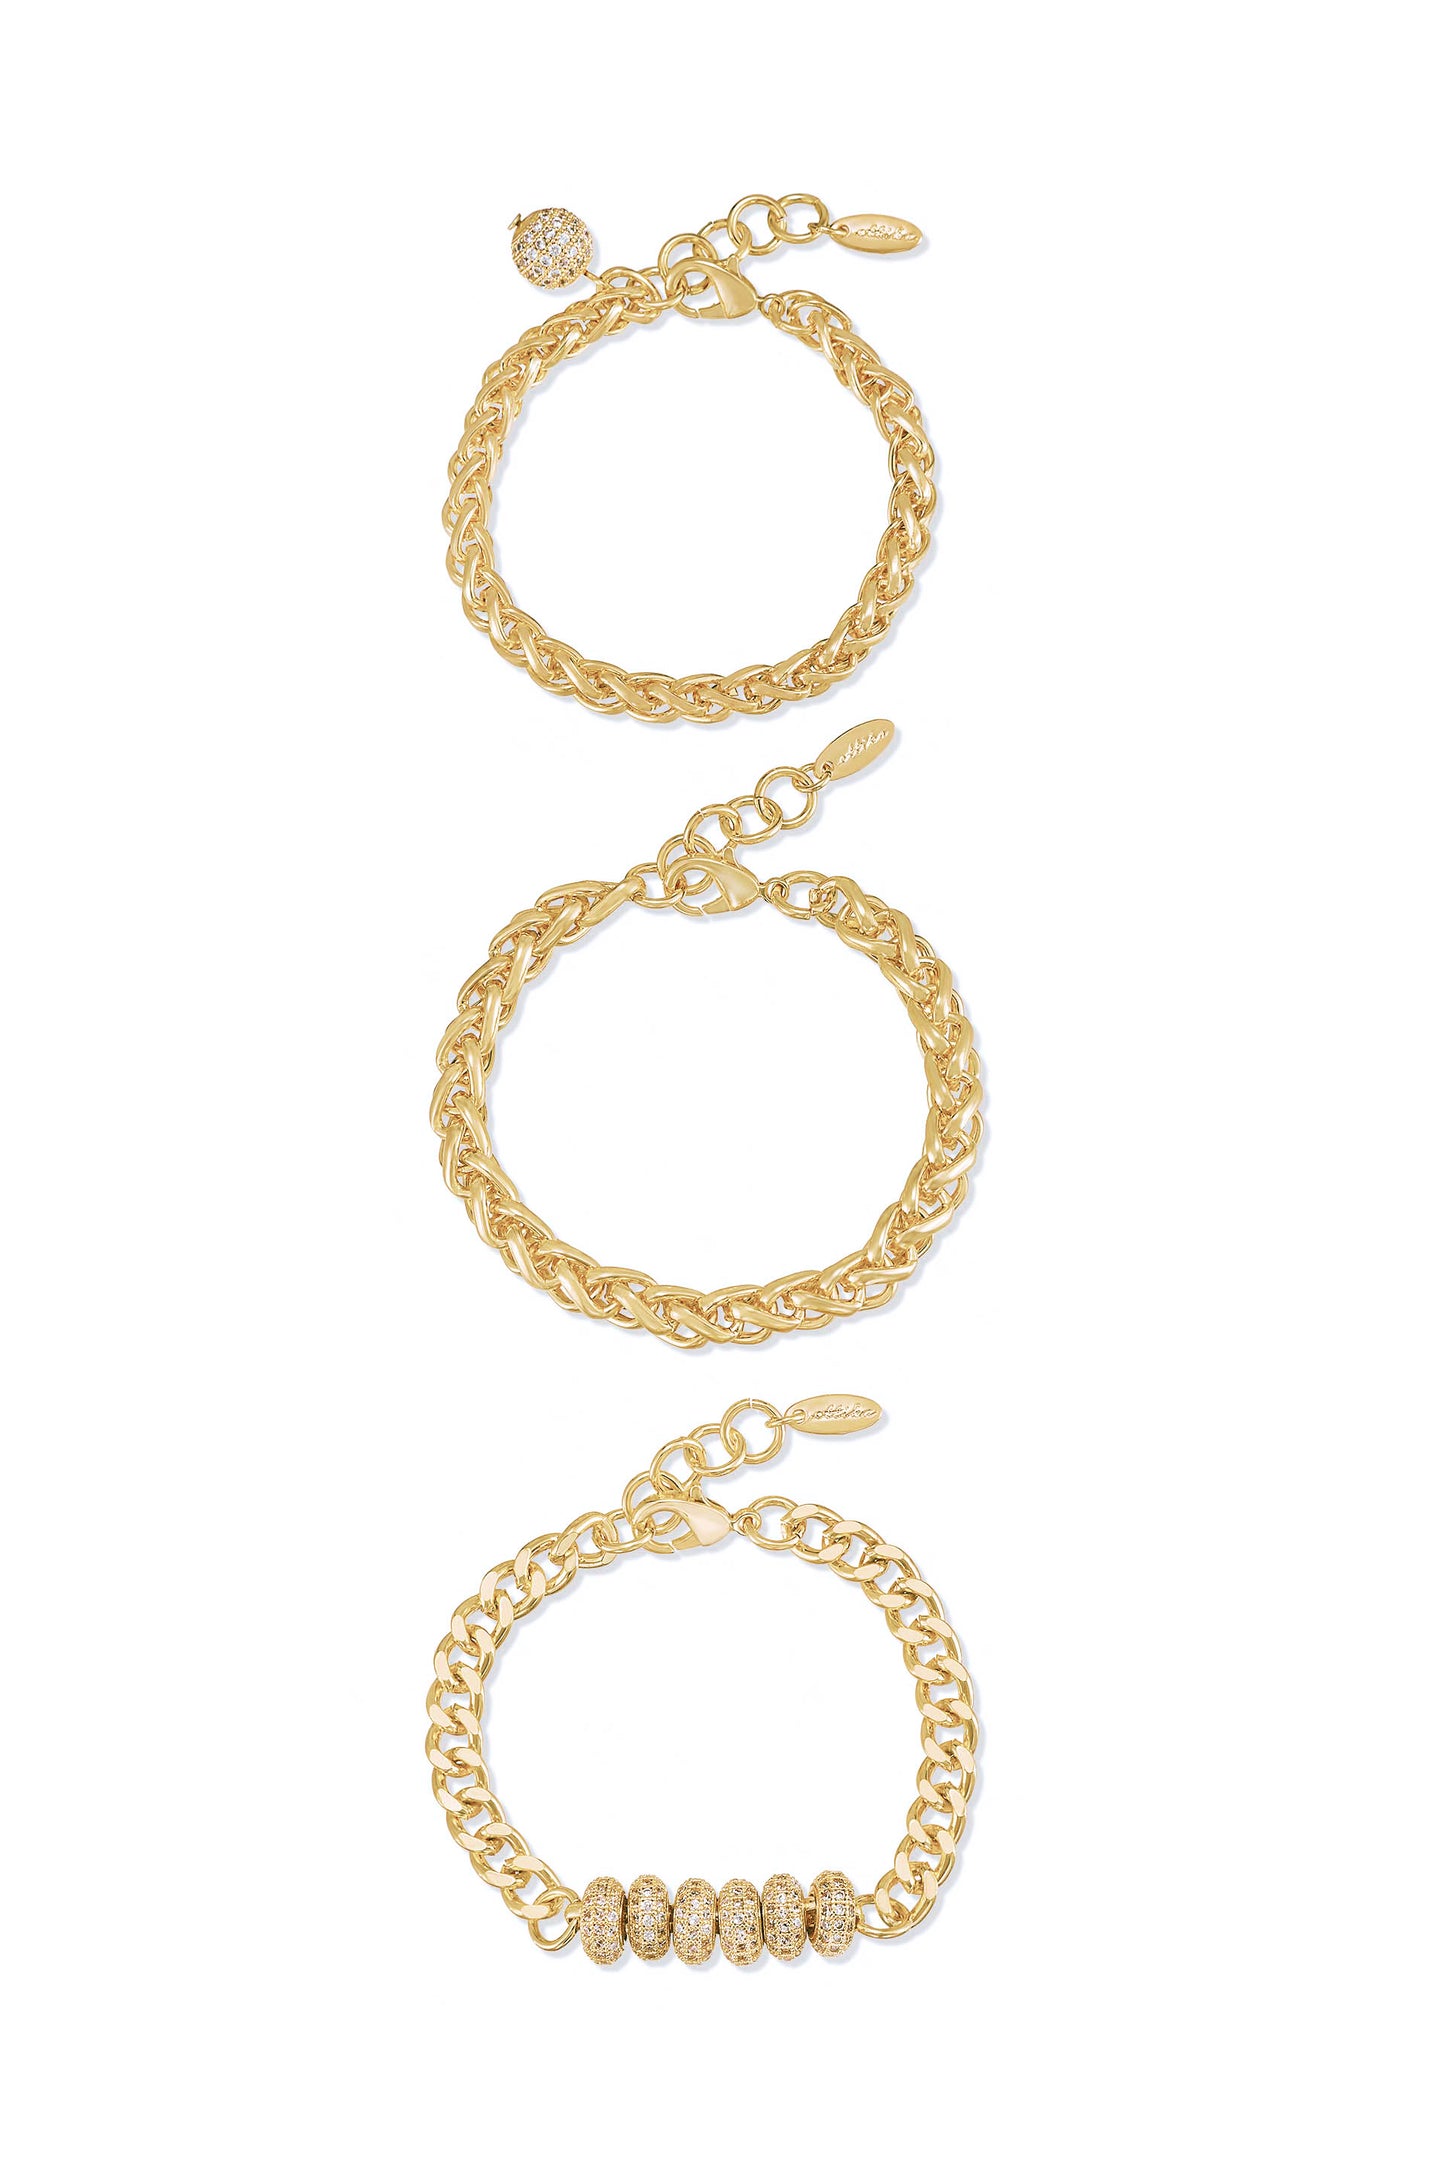 Linked Chain Trio 18k Gold Plated Bracelet Set